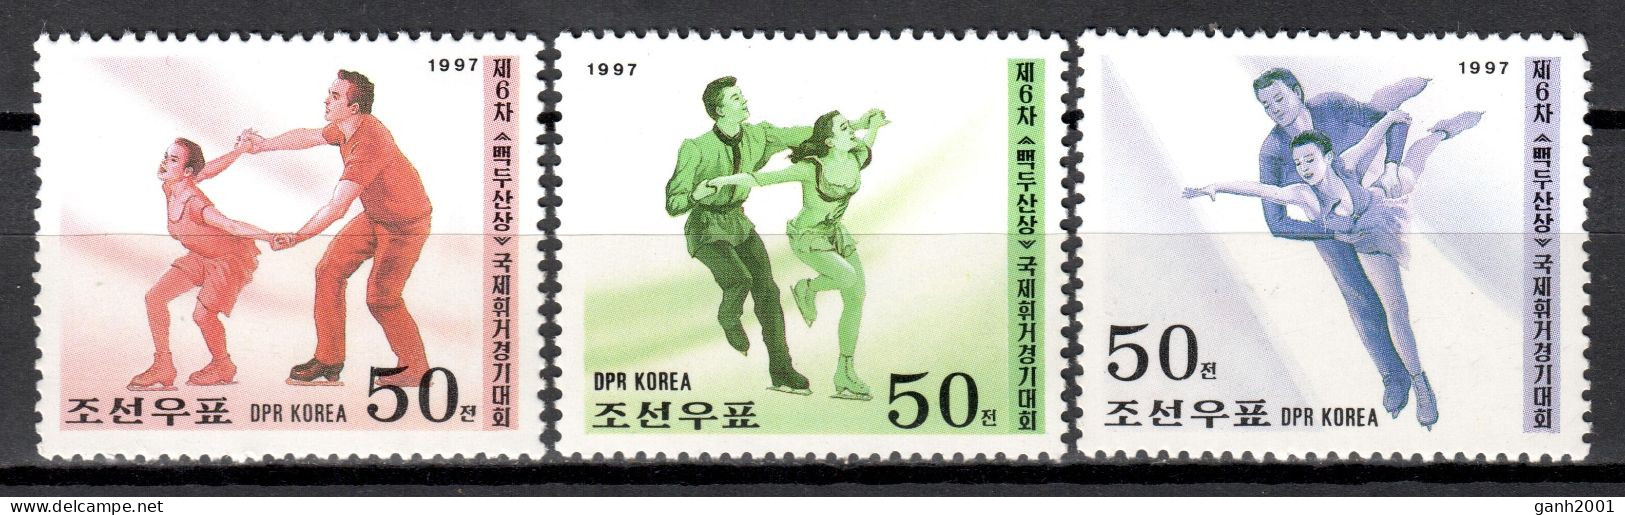 Korea North 1997 Corea / Figure Skating MNH Patinaje Artístico / Lx34  34-2 - Pattinaggio Artistico